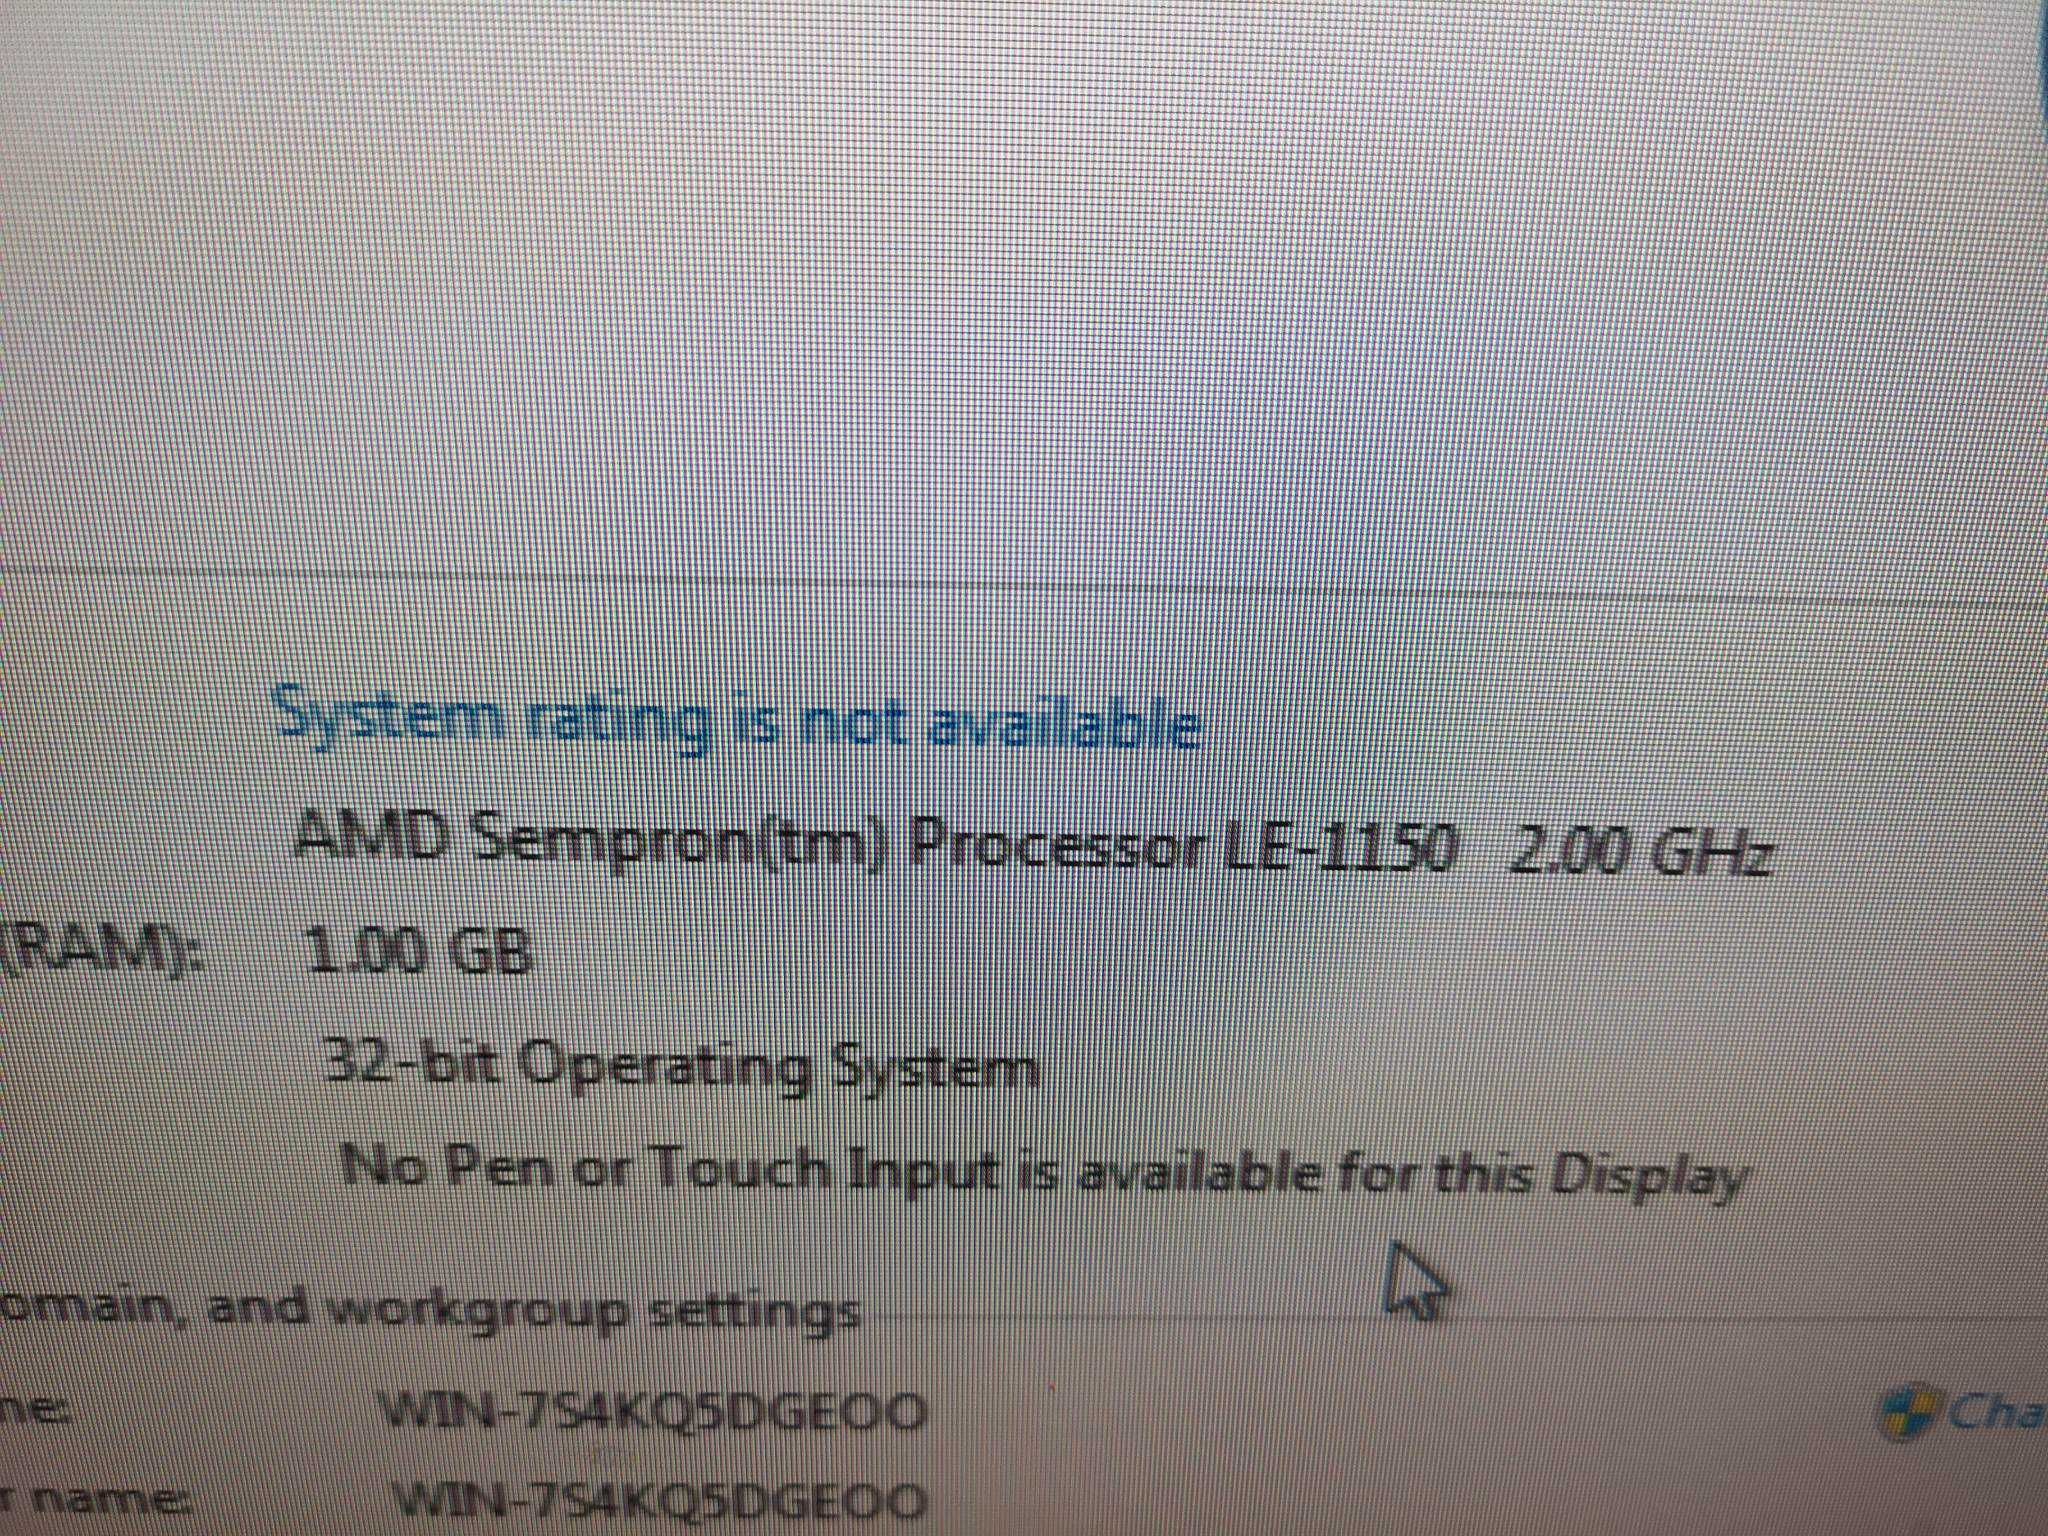 PC Amd Sempron le-1150 2 GHZ, 1 GB RAM, 256 Mb Ge Force, HDD 160